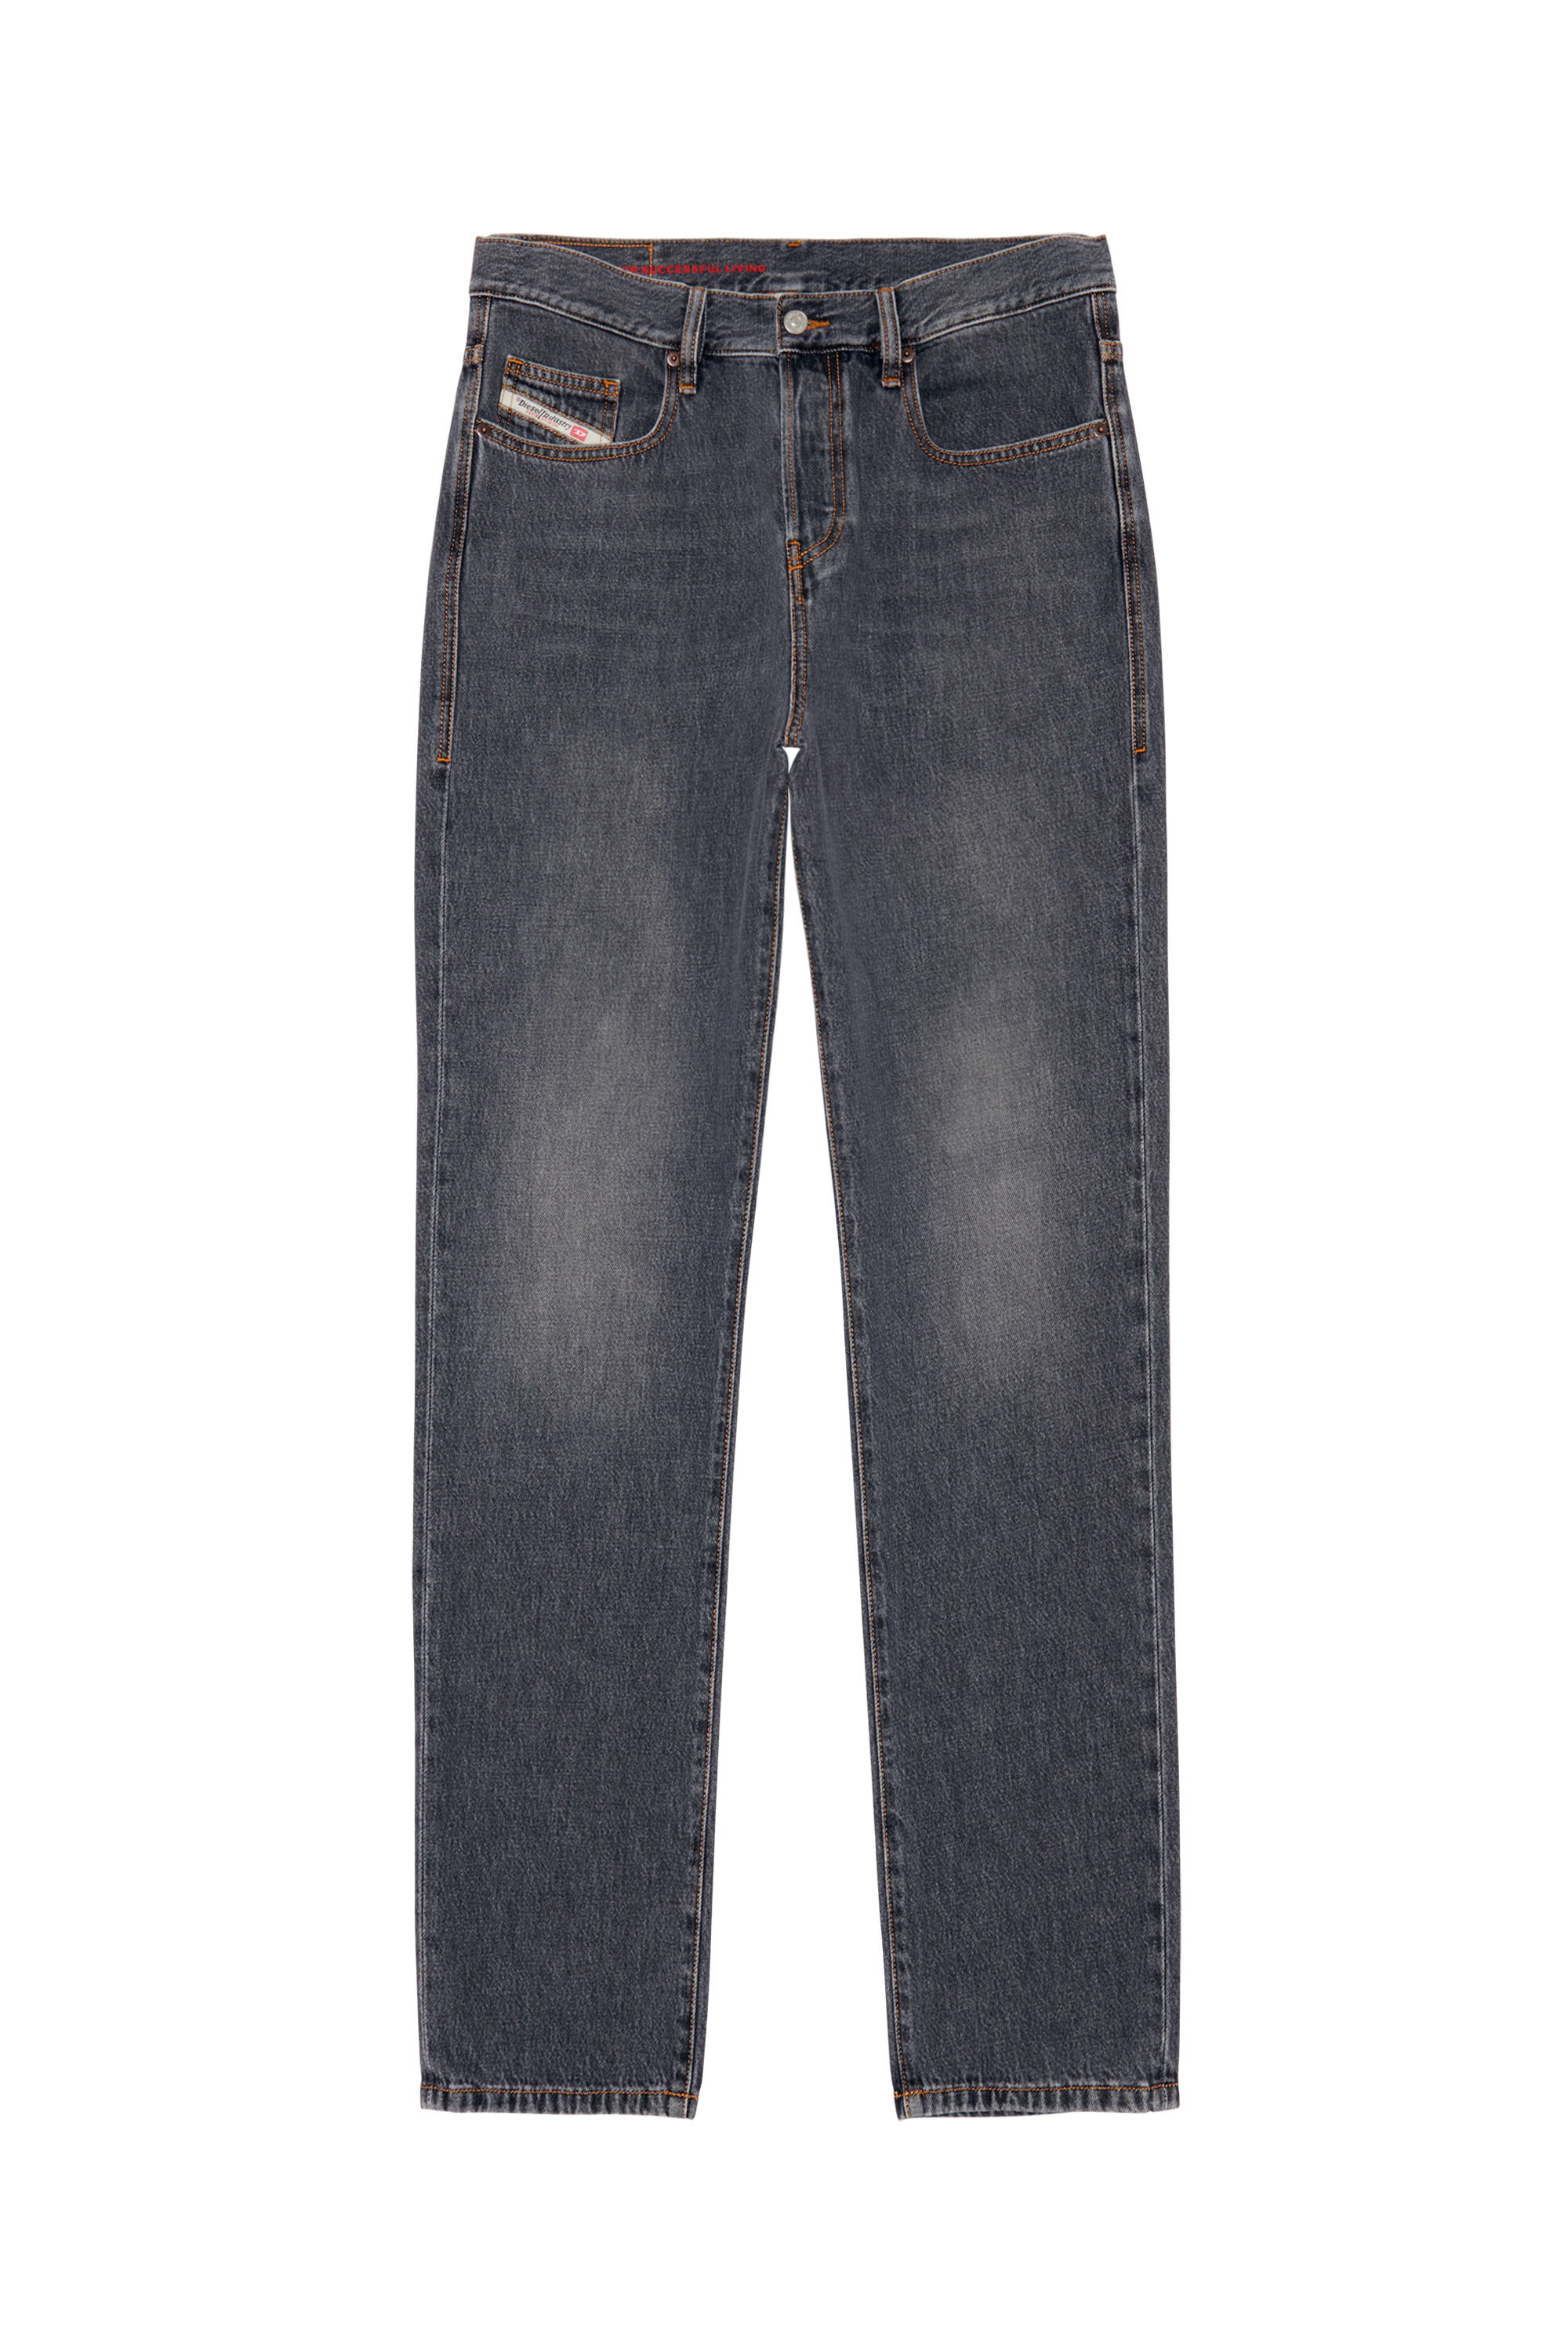 2020 D-VIKER 09B88 Straight Jeans, Black/Dark grey - Jeans